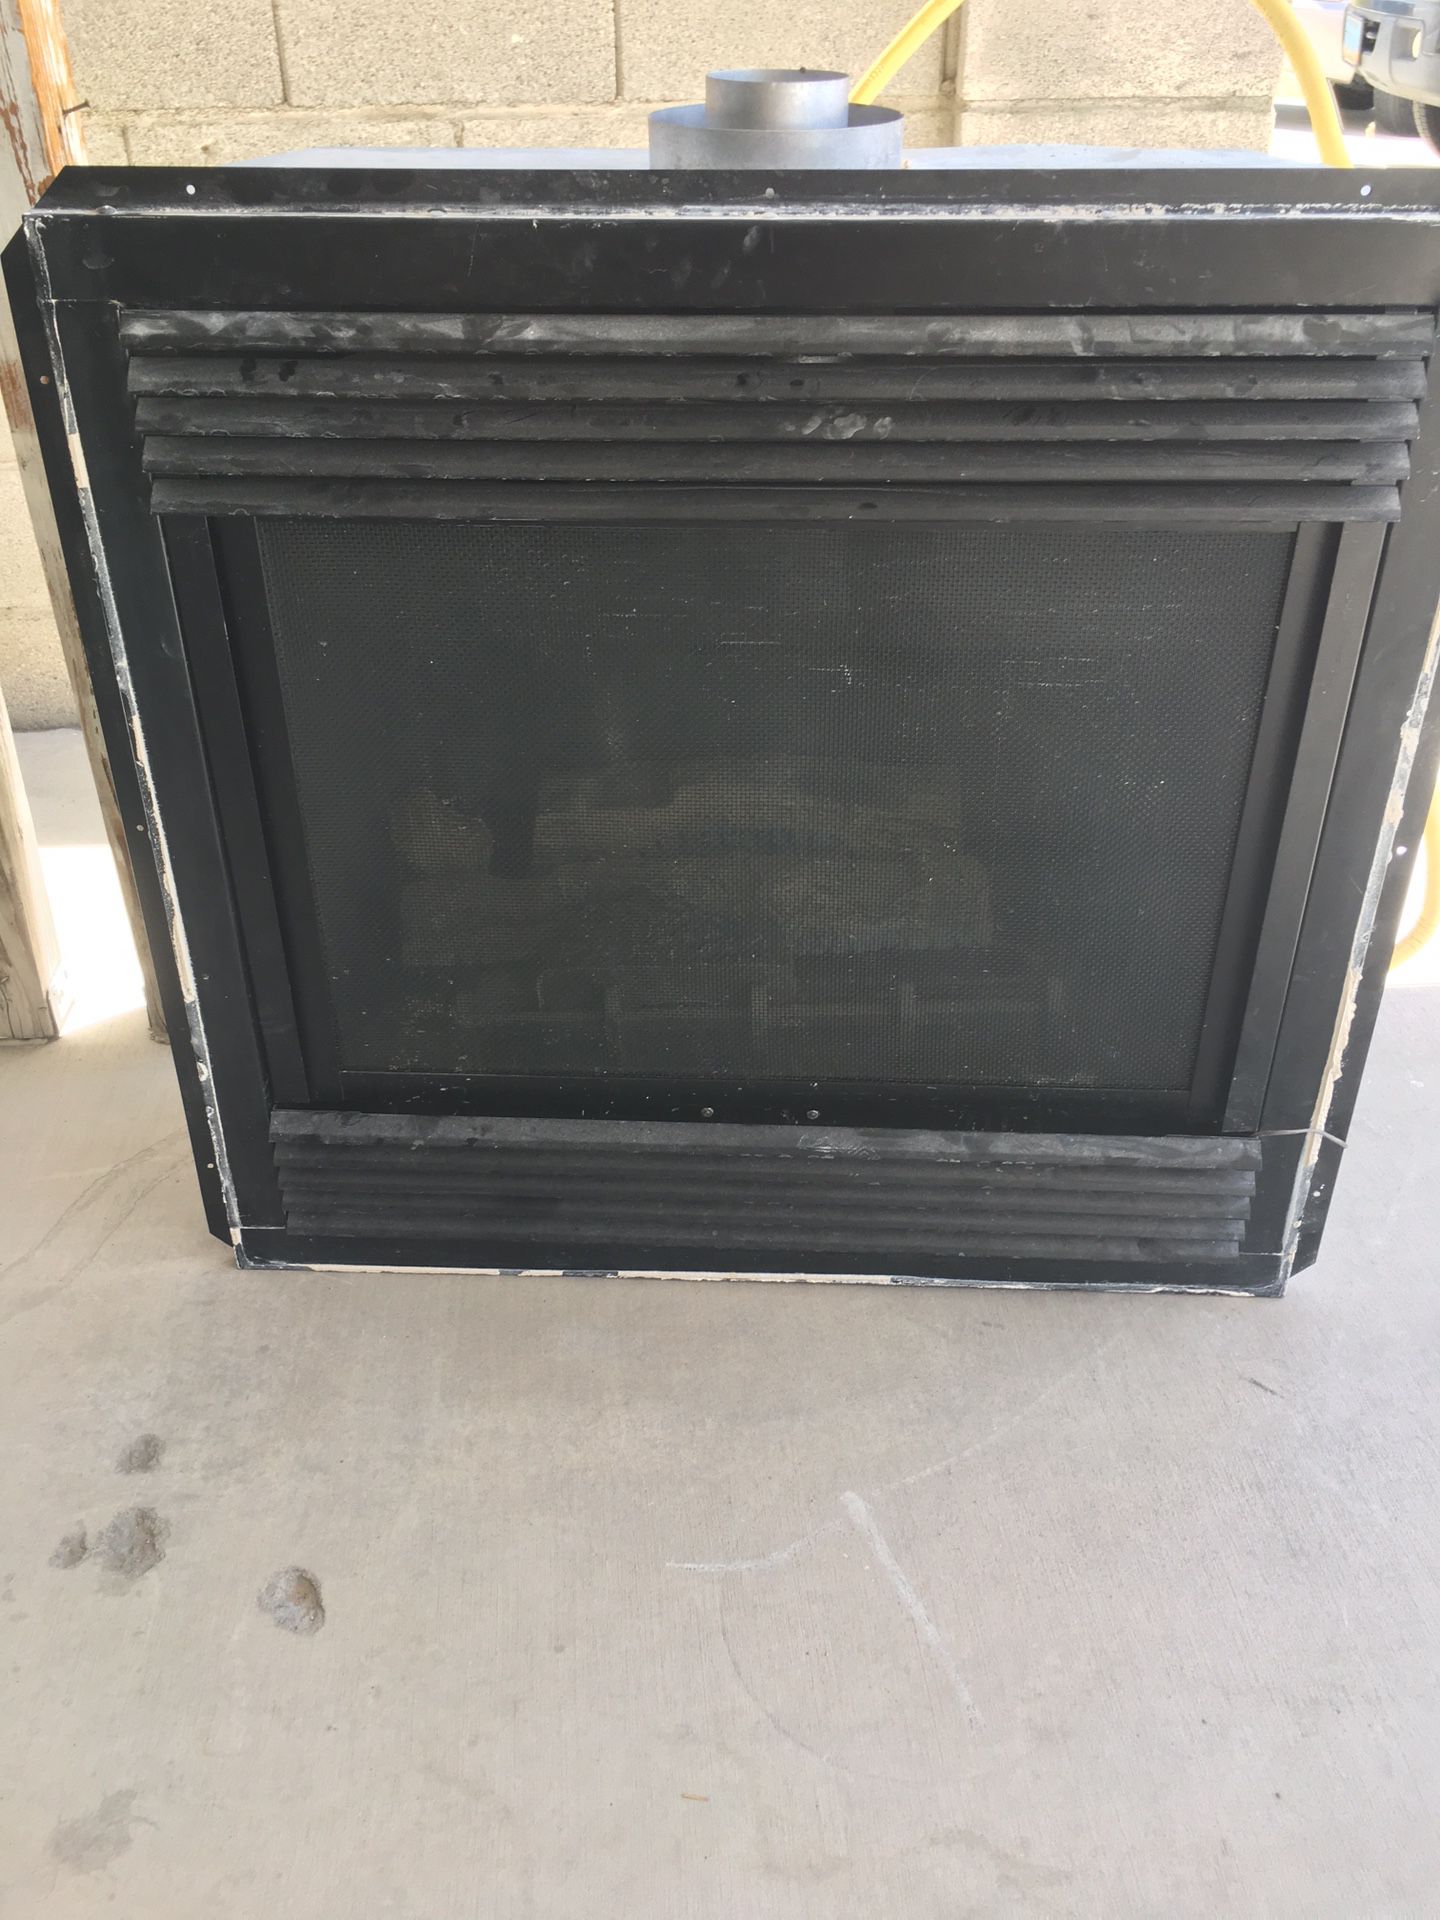 Fireplace de gas